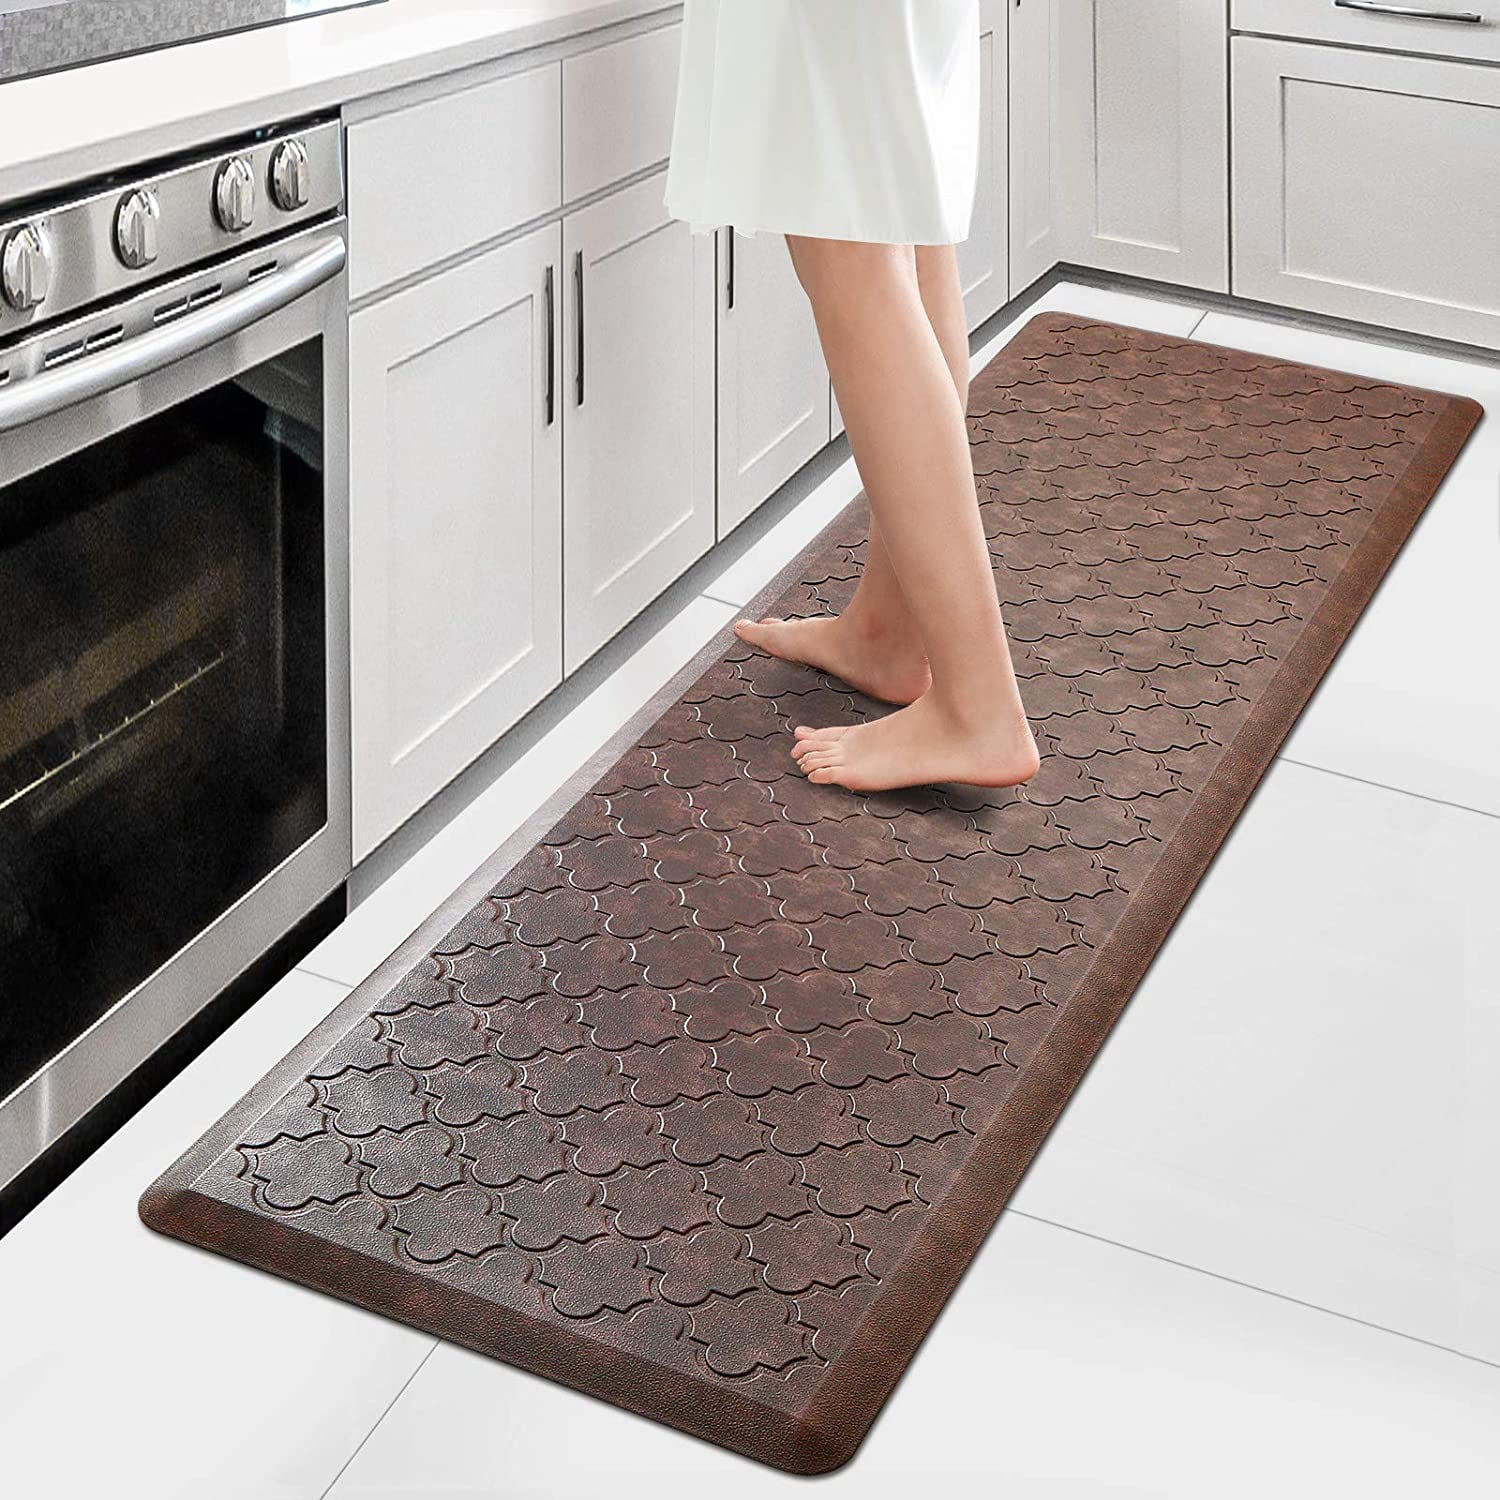 2PCS Kitchen Floor Mat Non Slip Runner Rug Set Door Cushion Decor Home Supply 